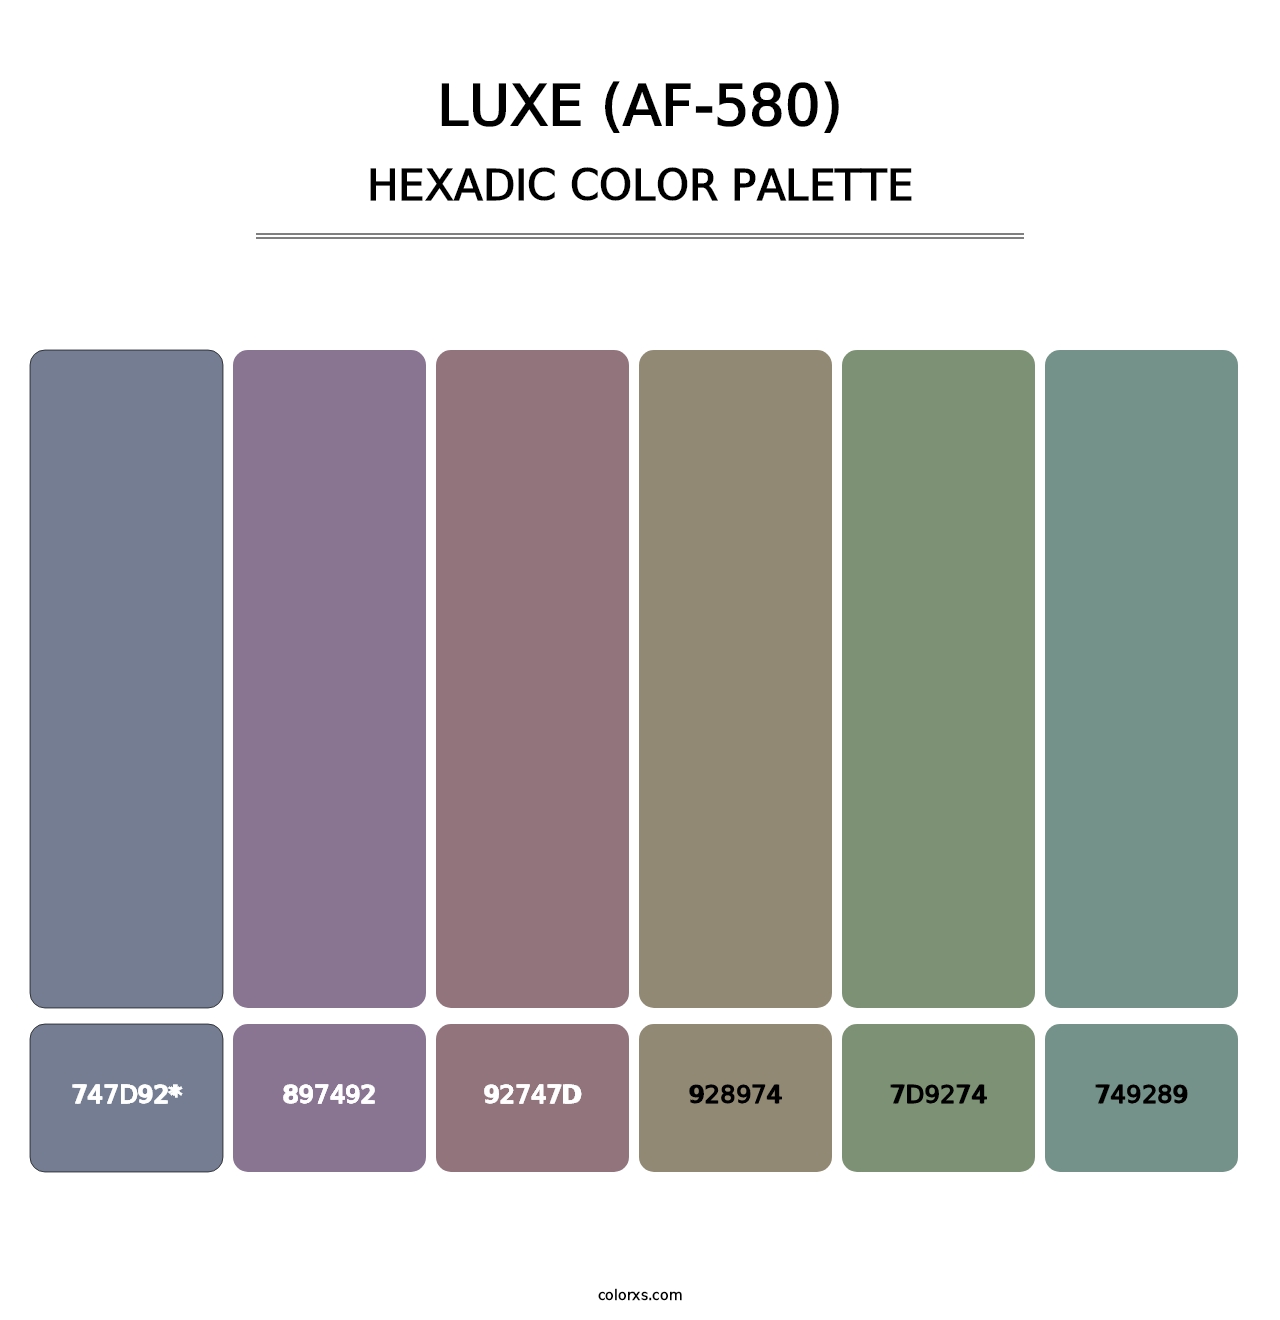 Luxe (AF-580) - Hexadic Color Palette